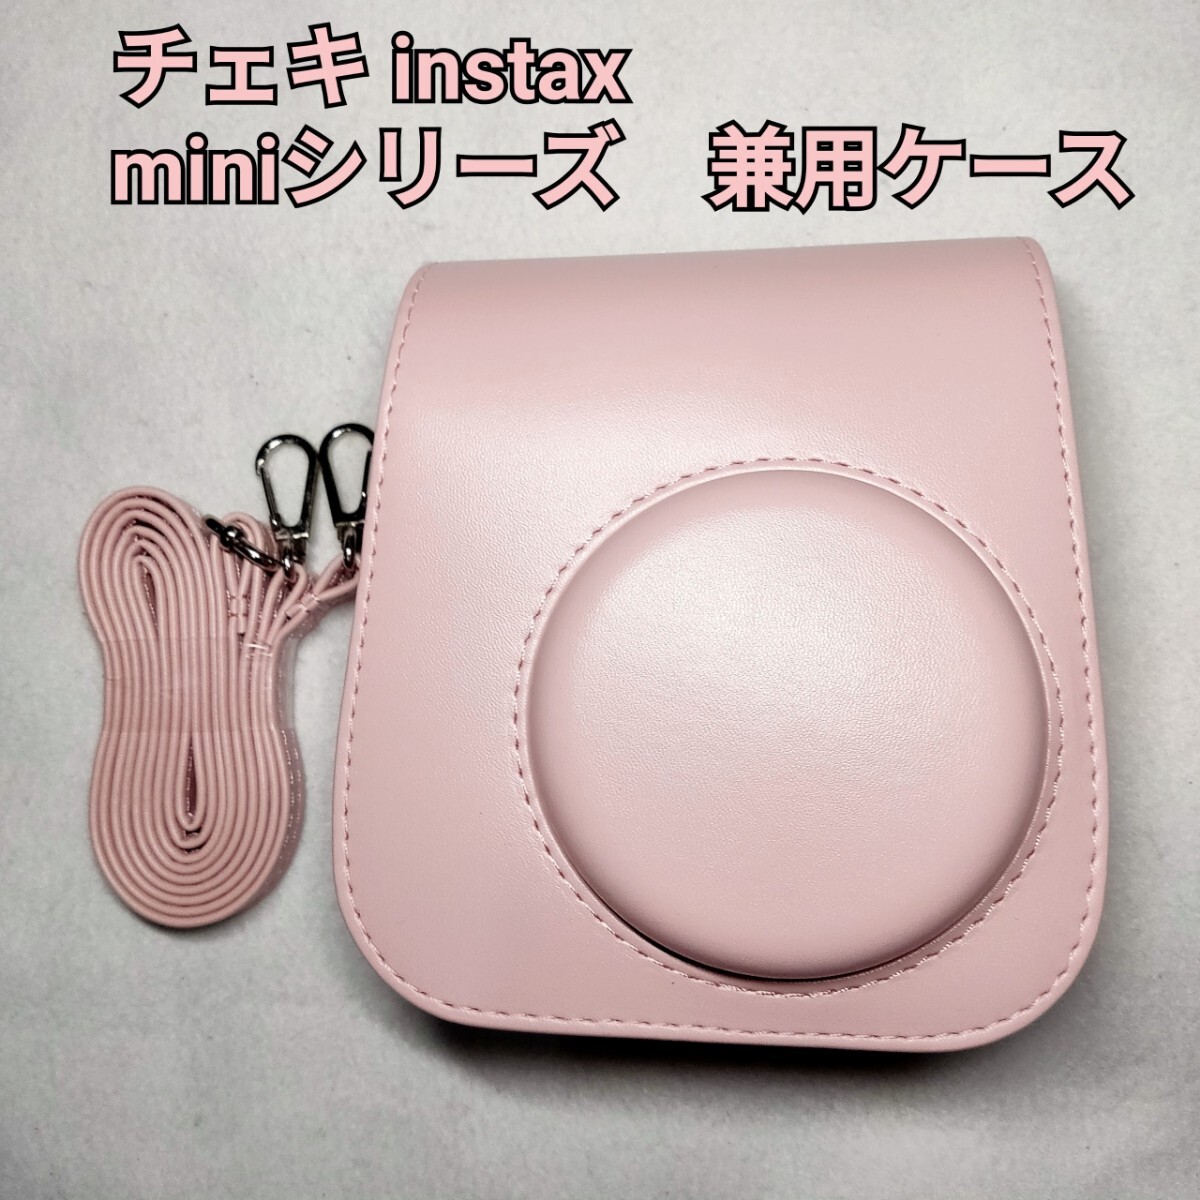  Cheki instax mini series combined use case pink 